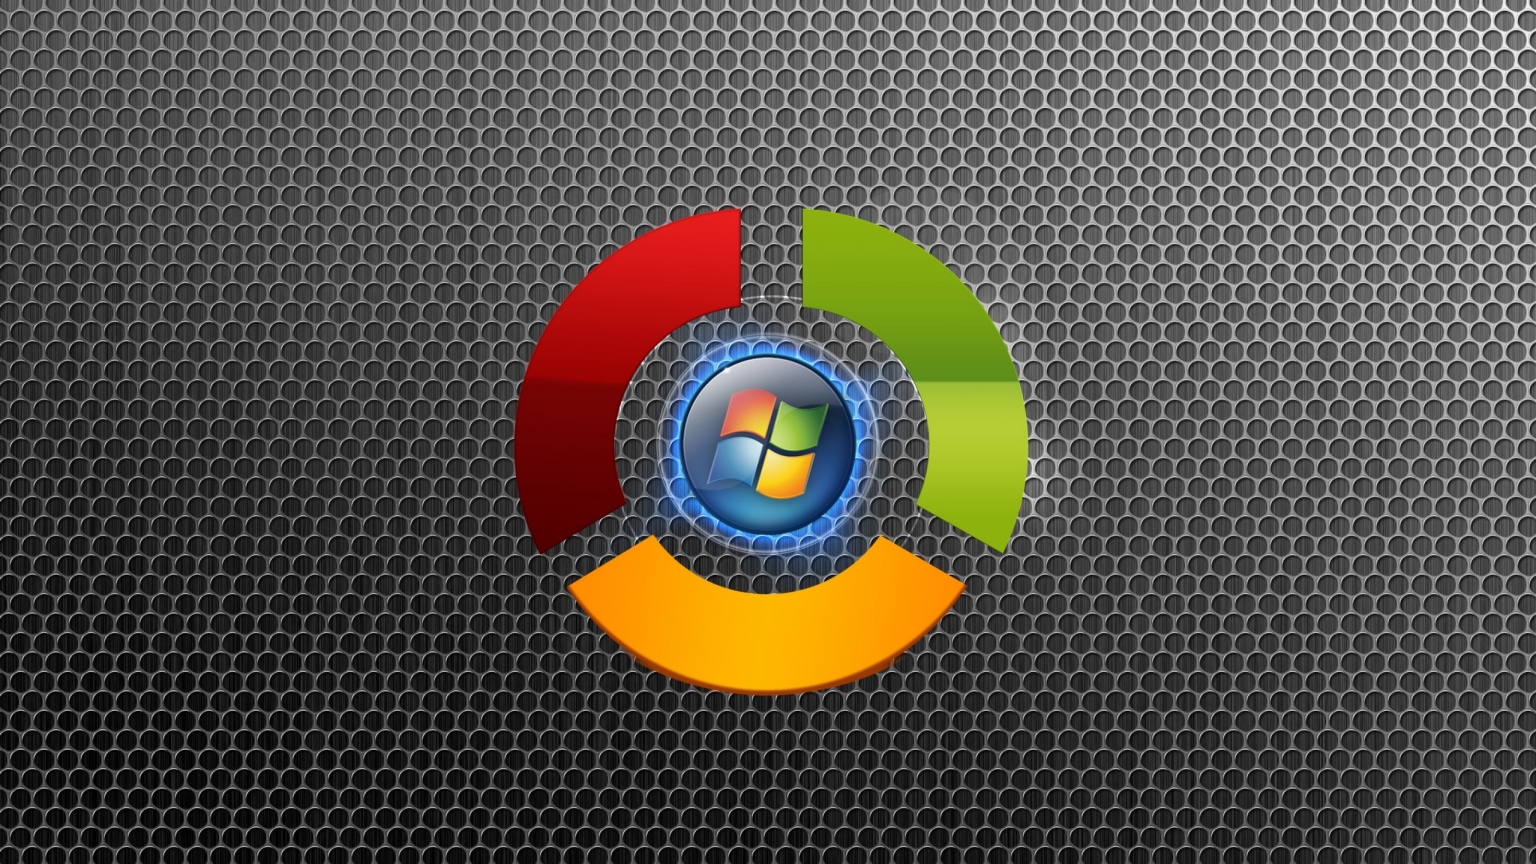 Google Chrome and Windows for 1536 x 864 HDTV resolution